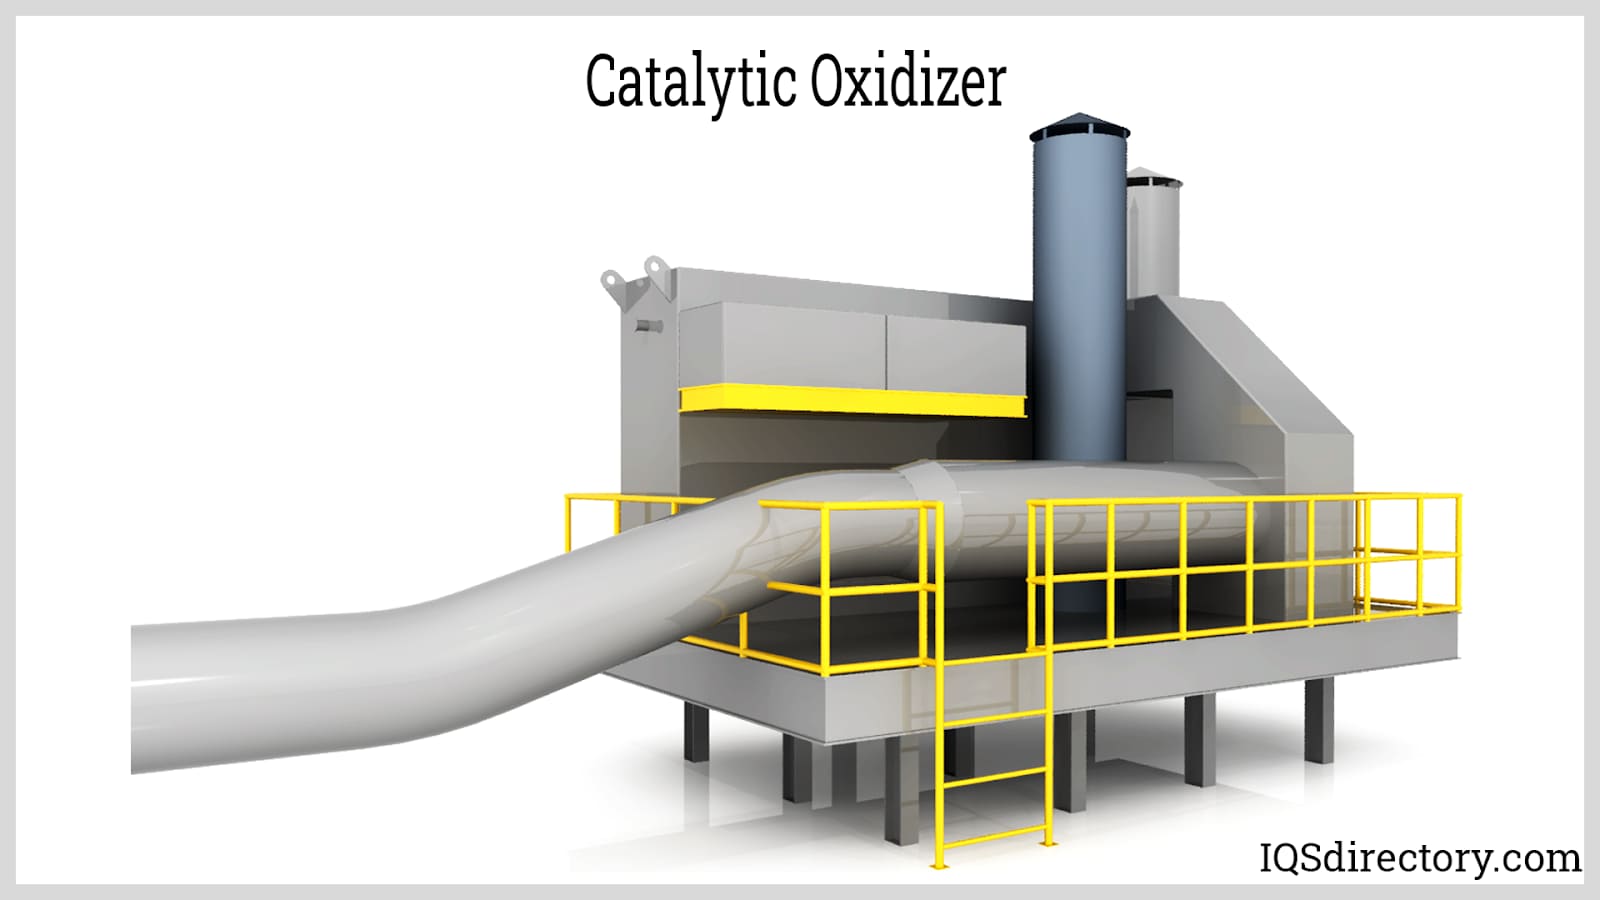 A Catalytic Oxidizer